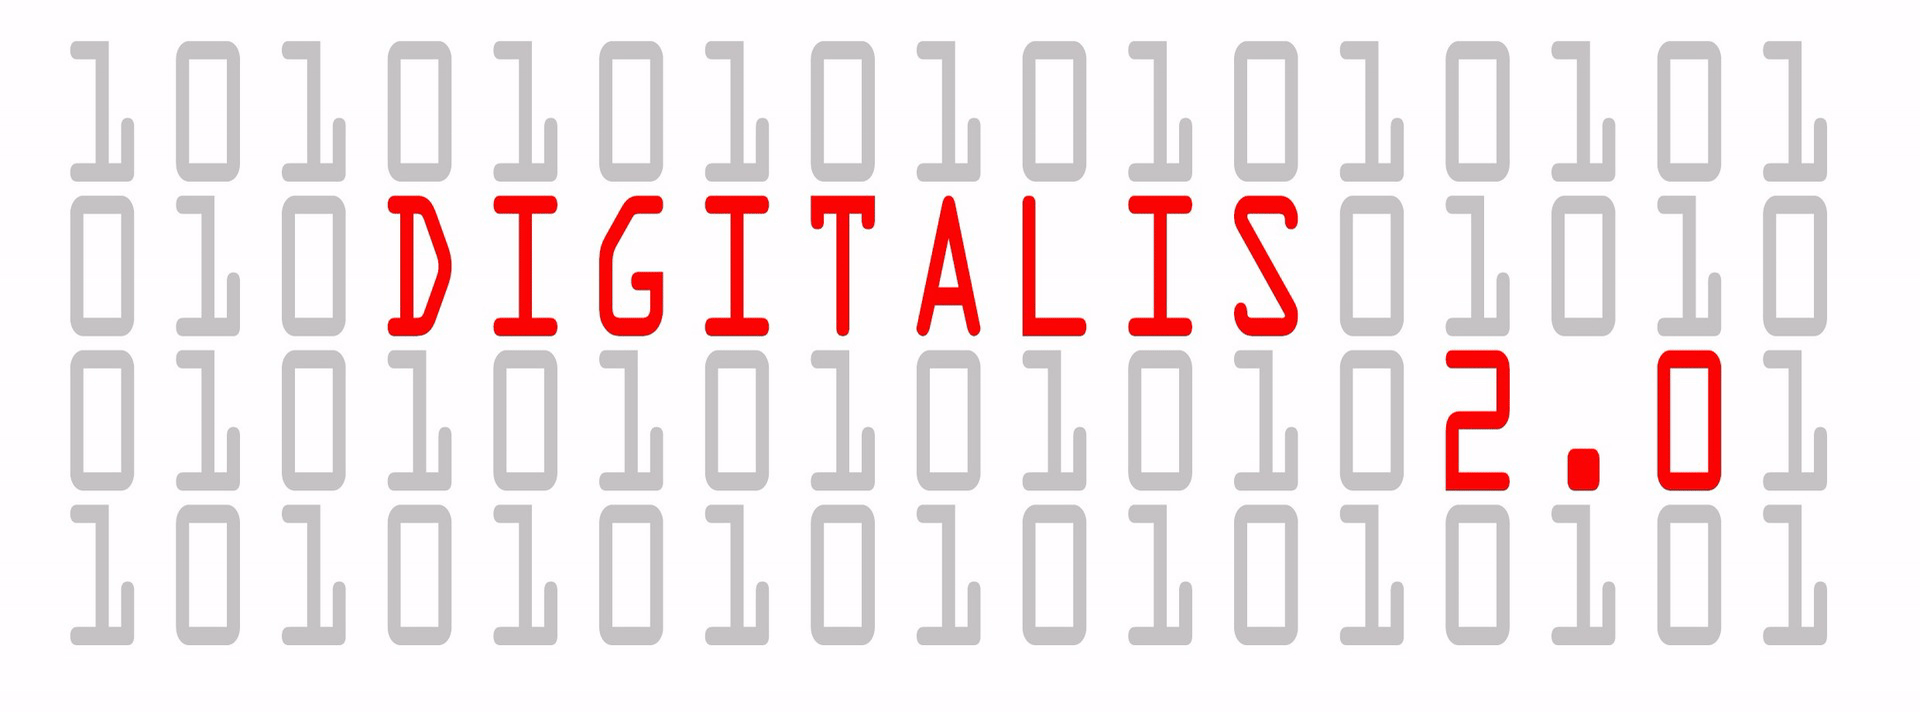 gif saying digitalis 2.0